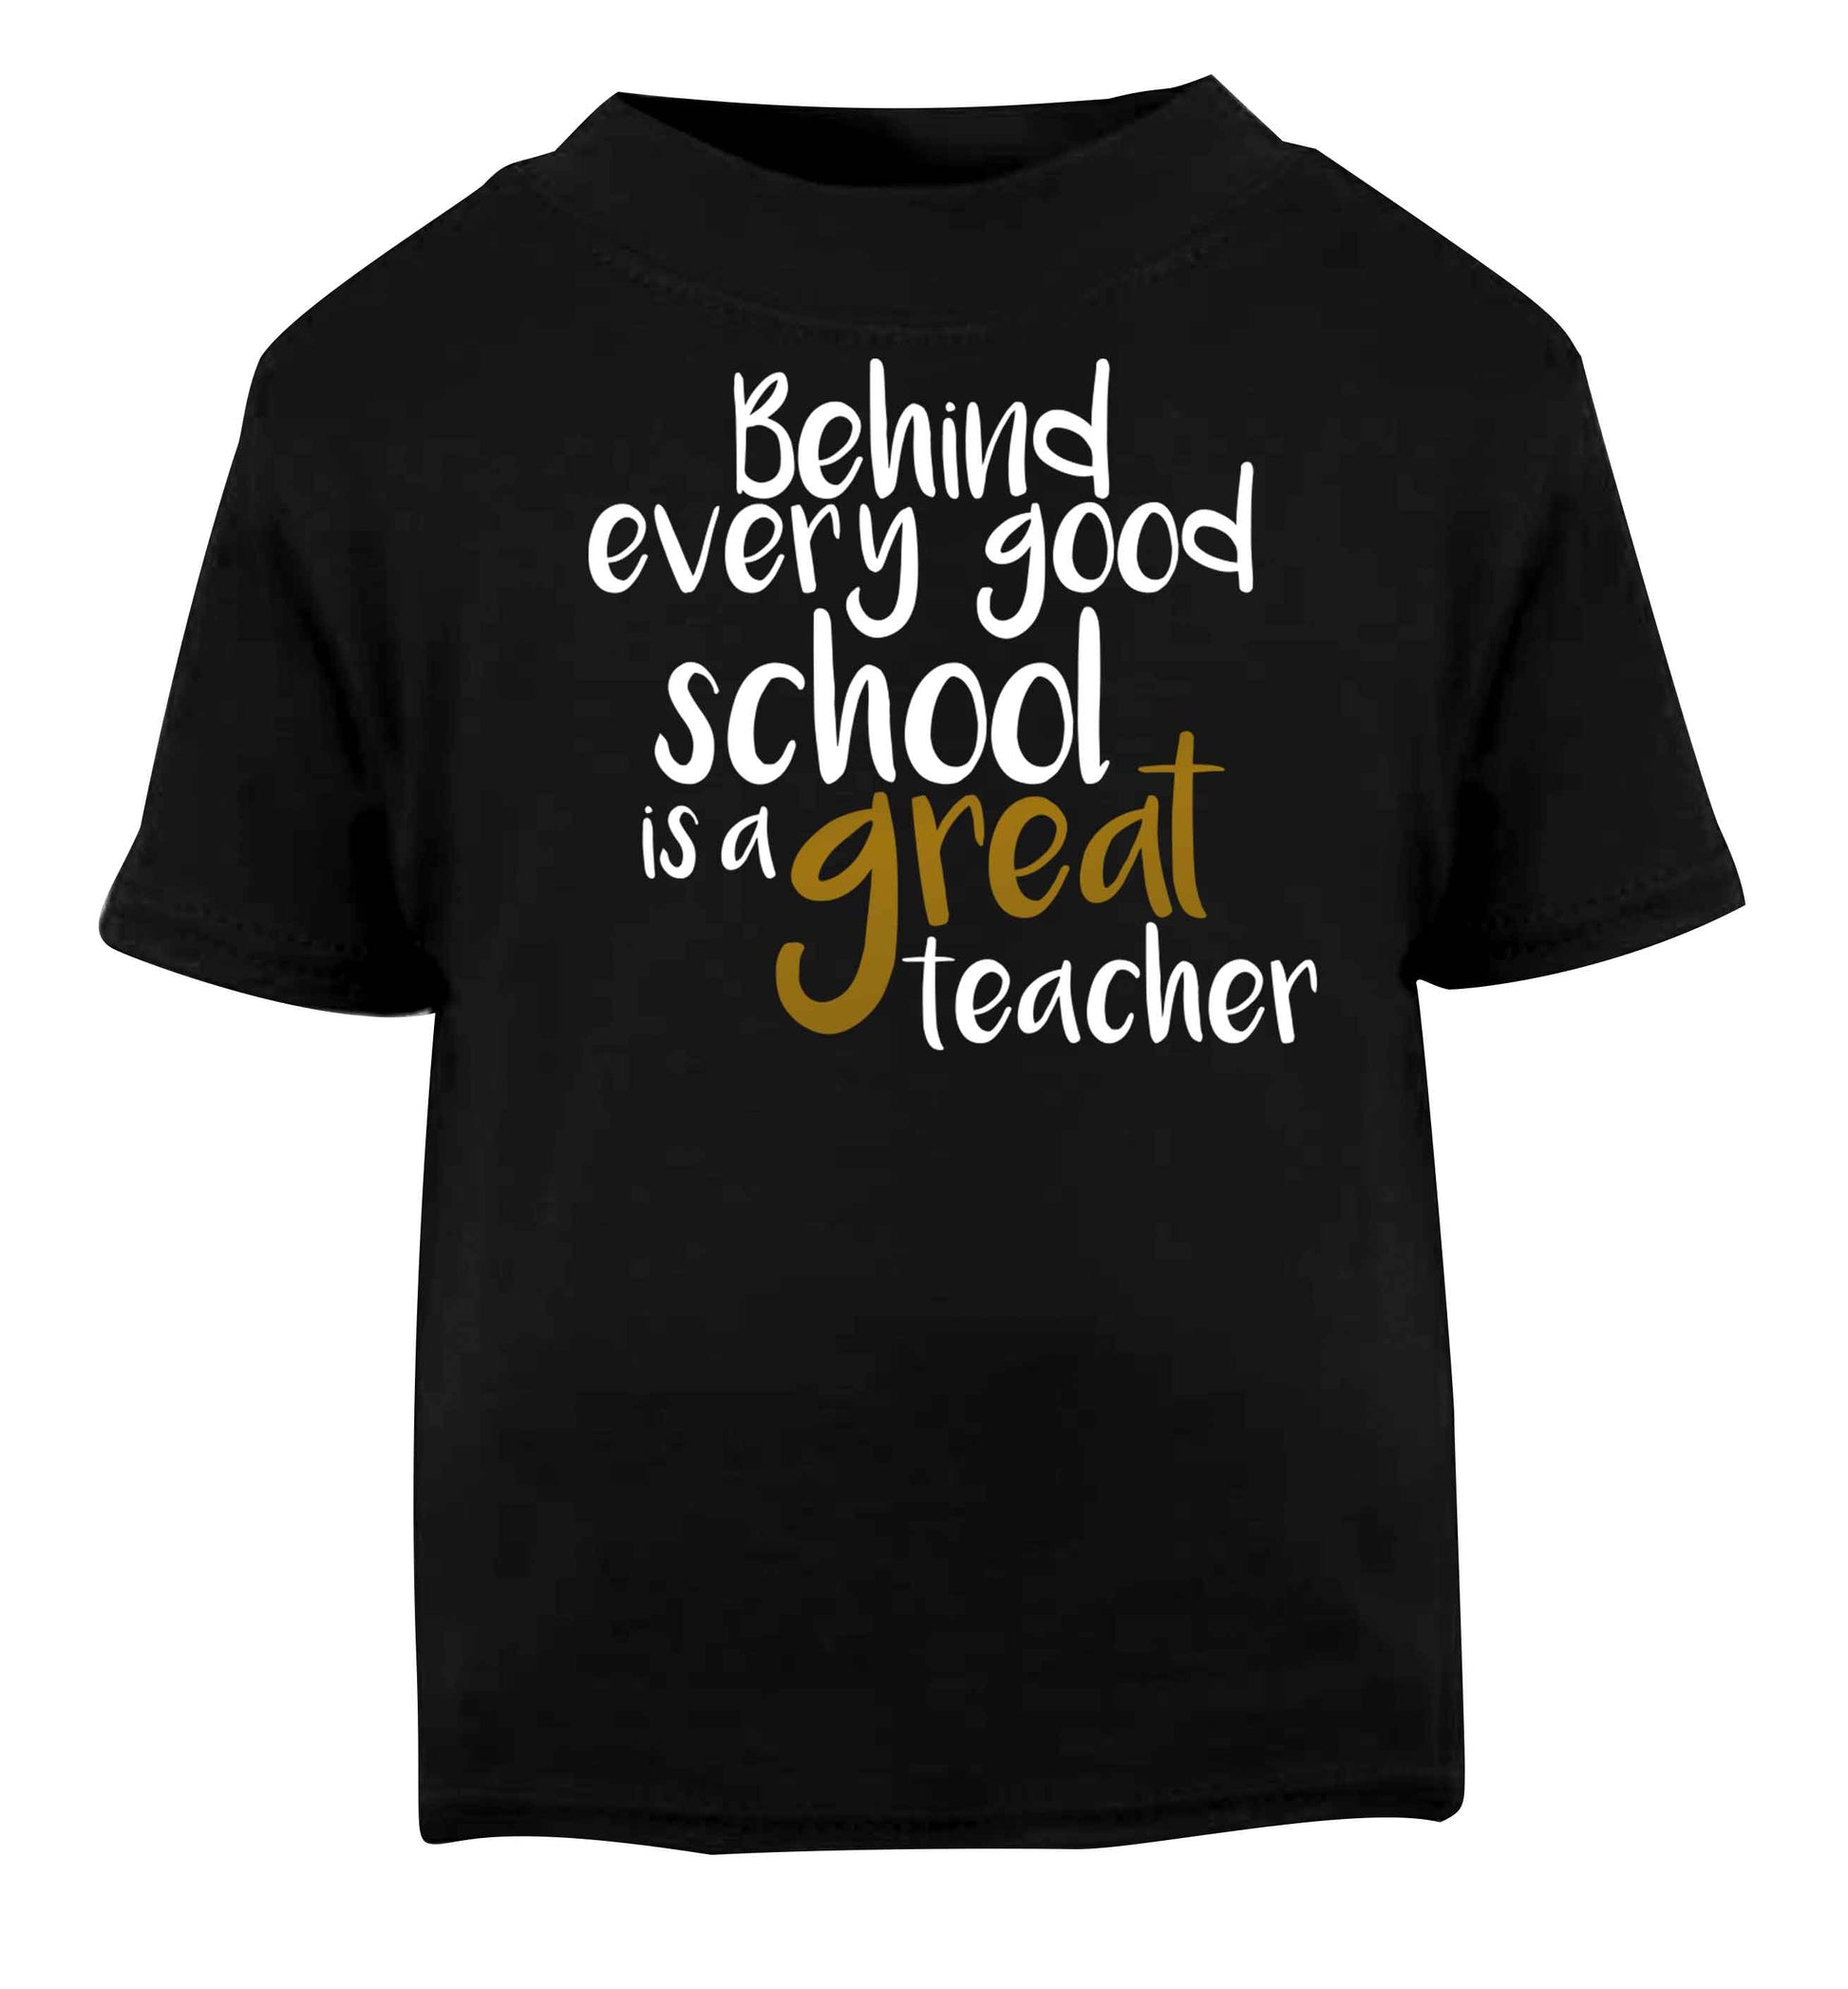 Behind every good school is a great teacher Black baby toddler Tshirt 2 years